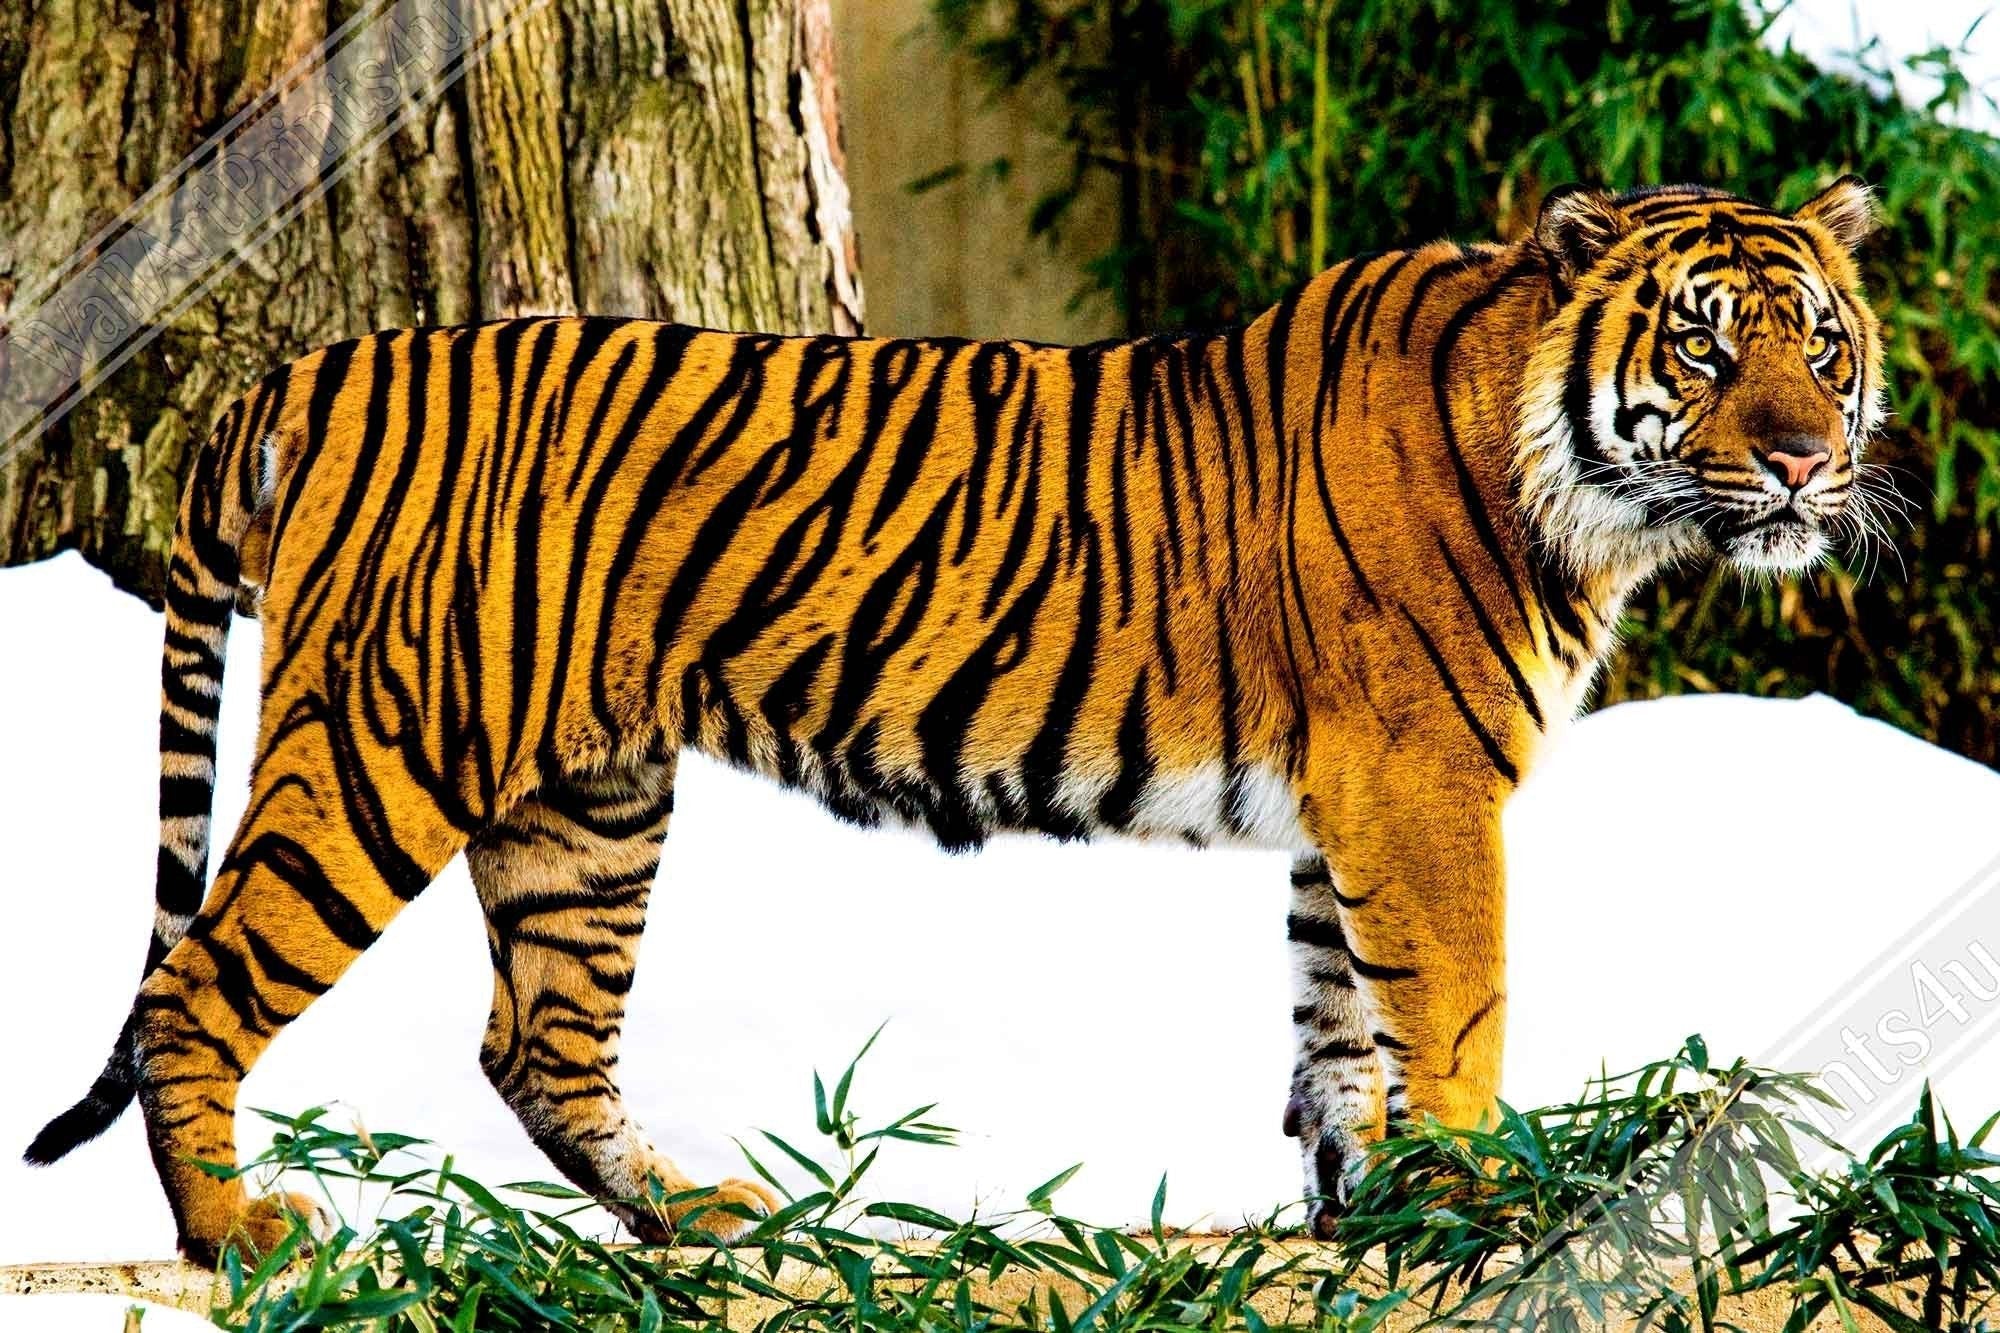 Tiger Canvas, Sumatran Tiger Smithsonian National Zoo 2009 - WallArtPrints4U